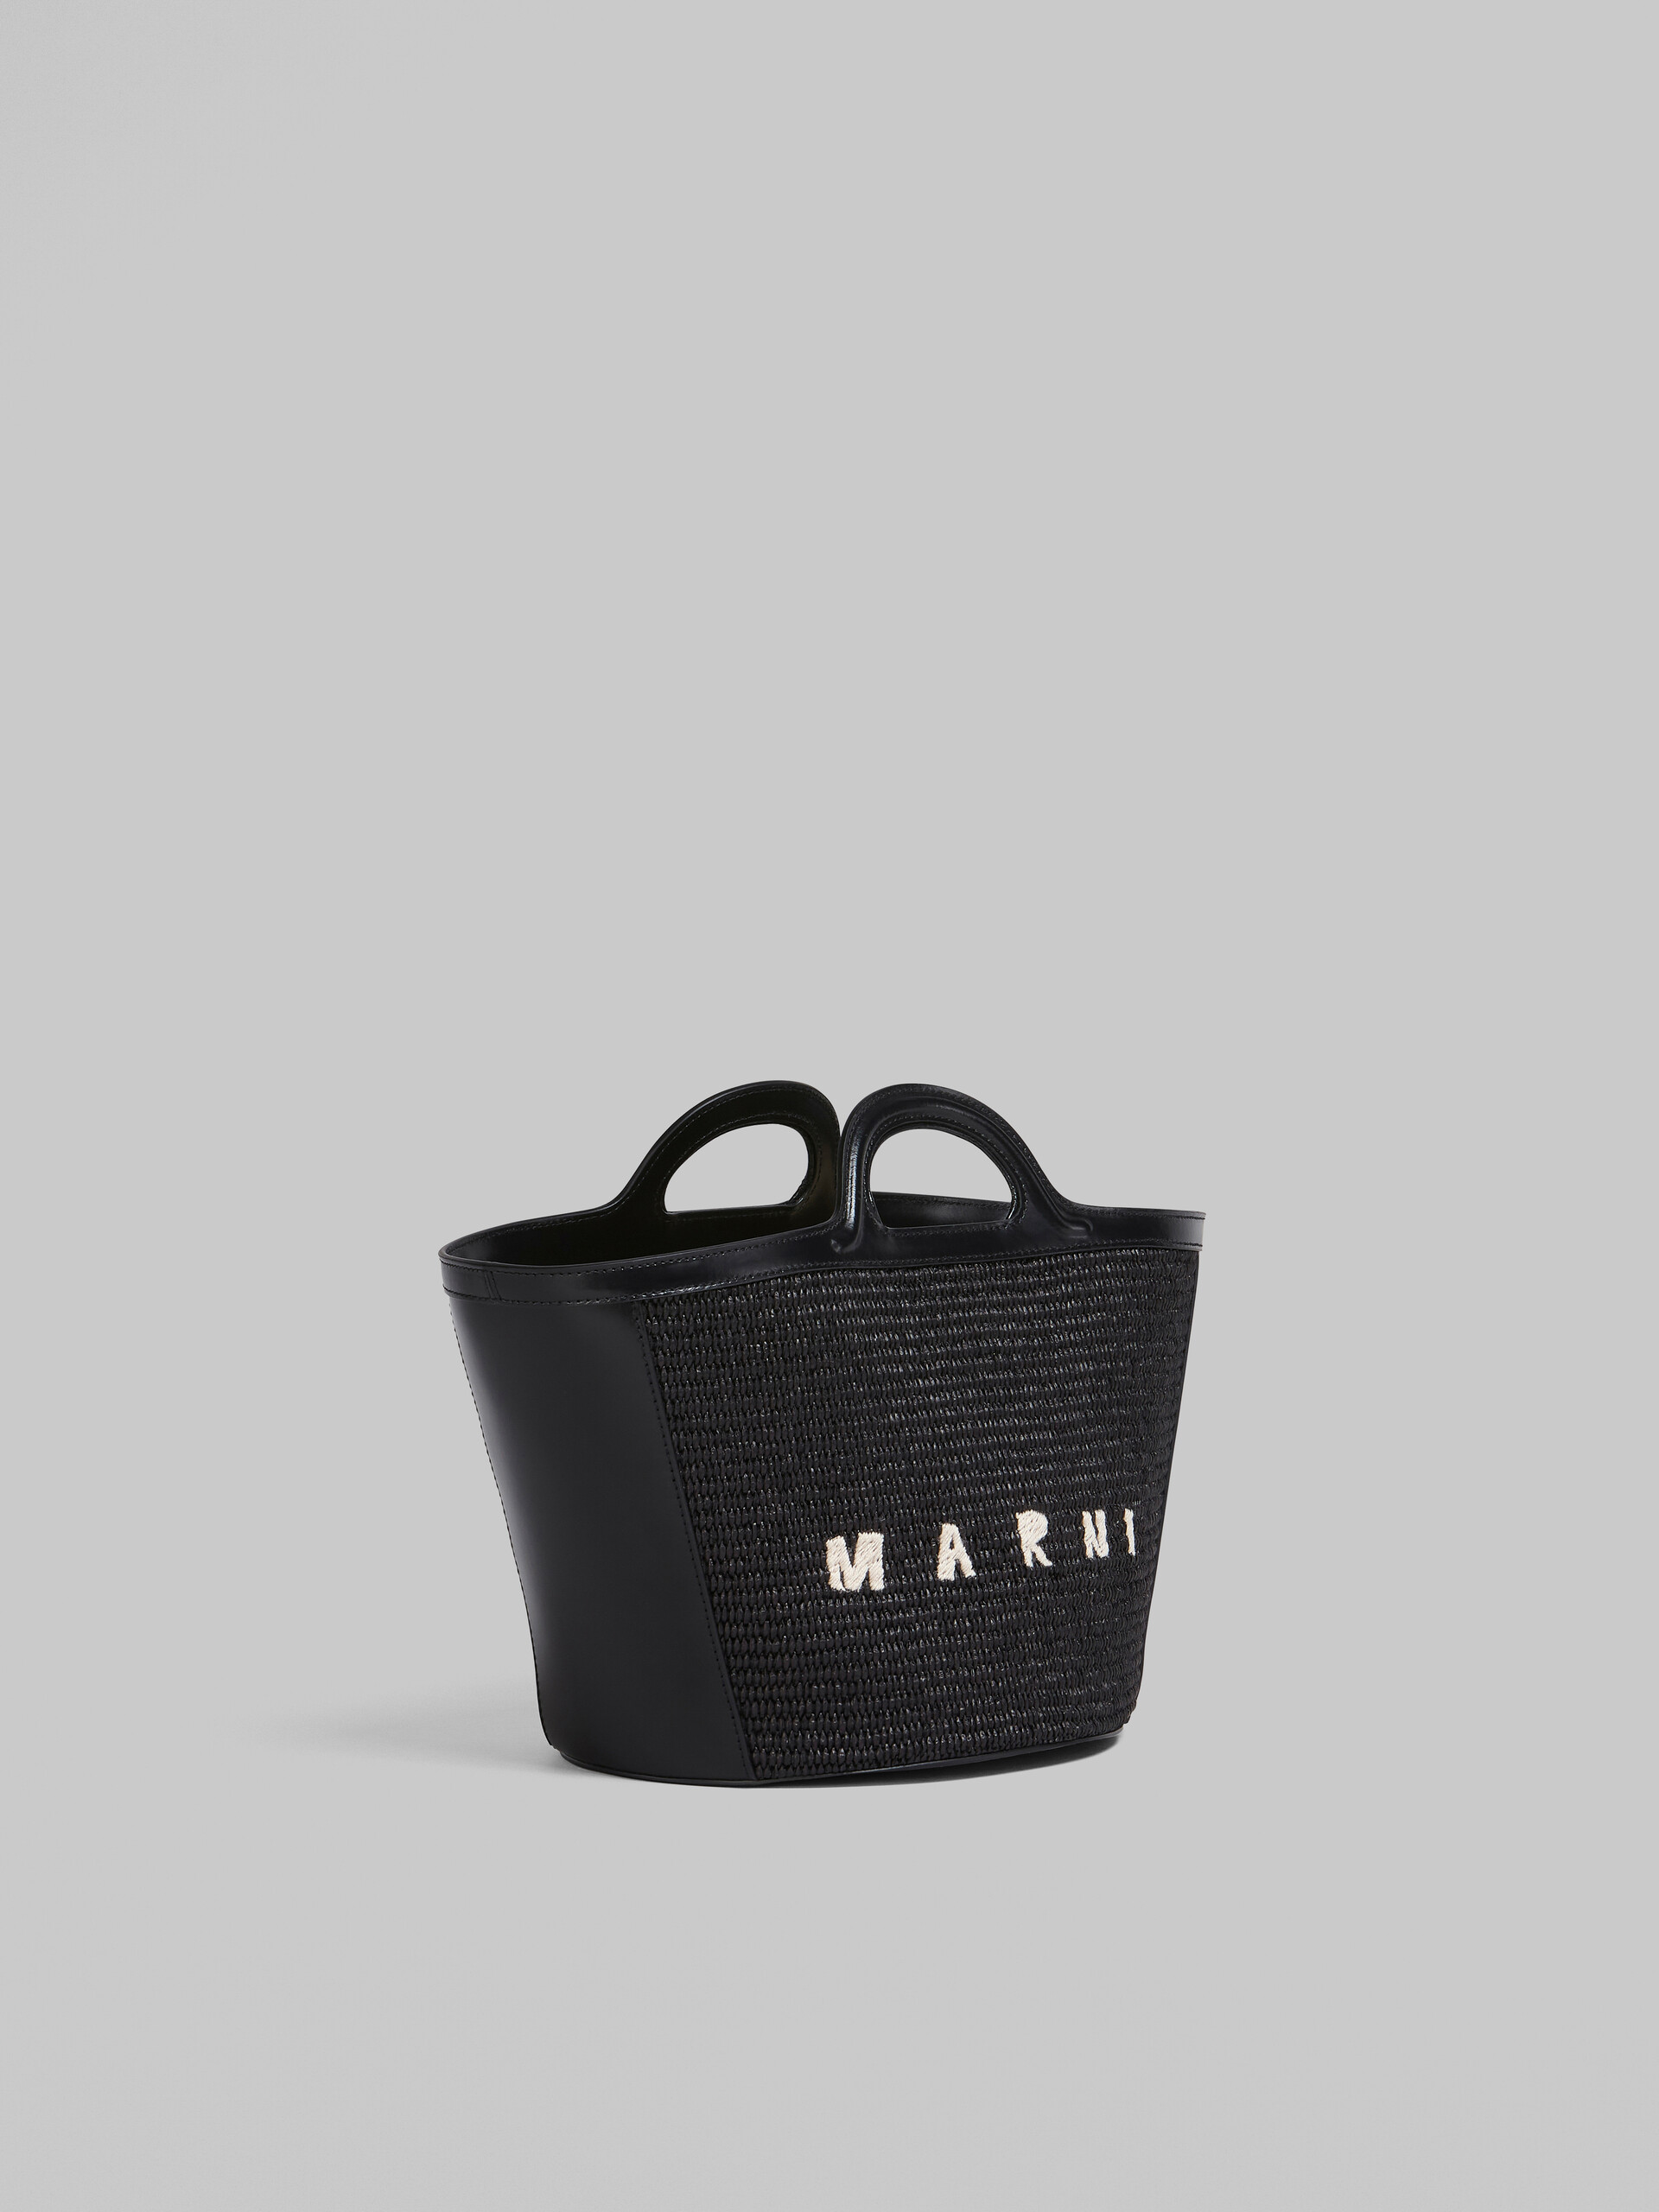 TROPICALIA small bag in black leather and raffia - Handbag - Image 6